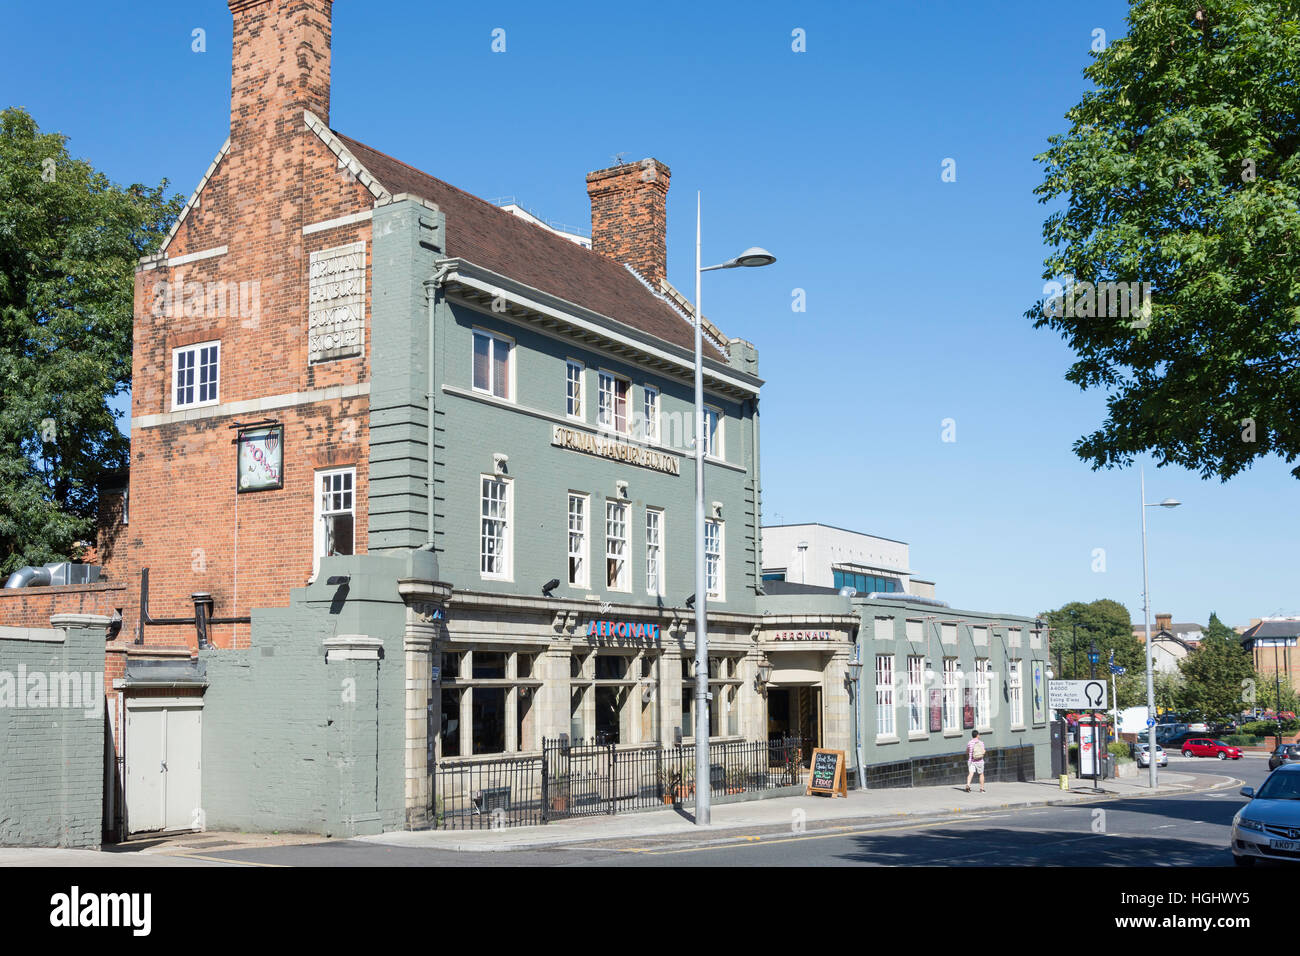 L'aéronaute Pub, Acton Acton, High Street, London Borough of Ealing, Greater London, Angleterre, Royaume-Uni Banque D'Images